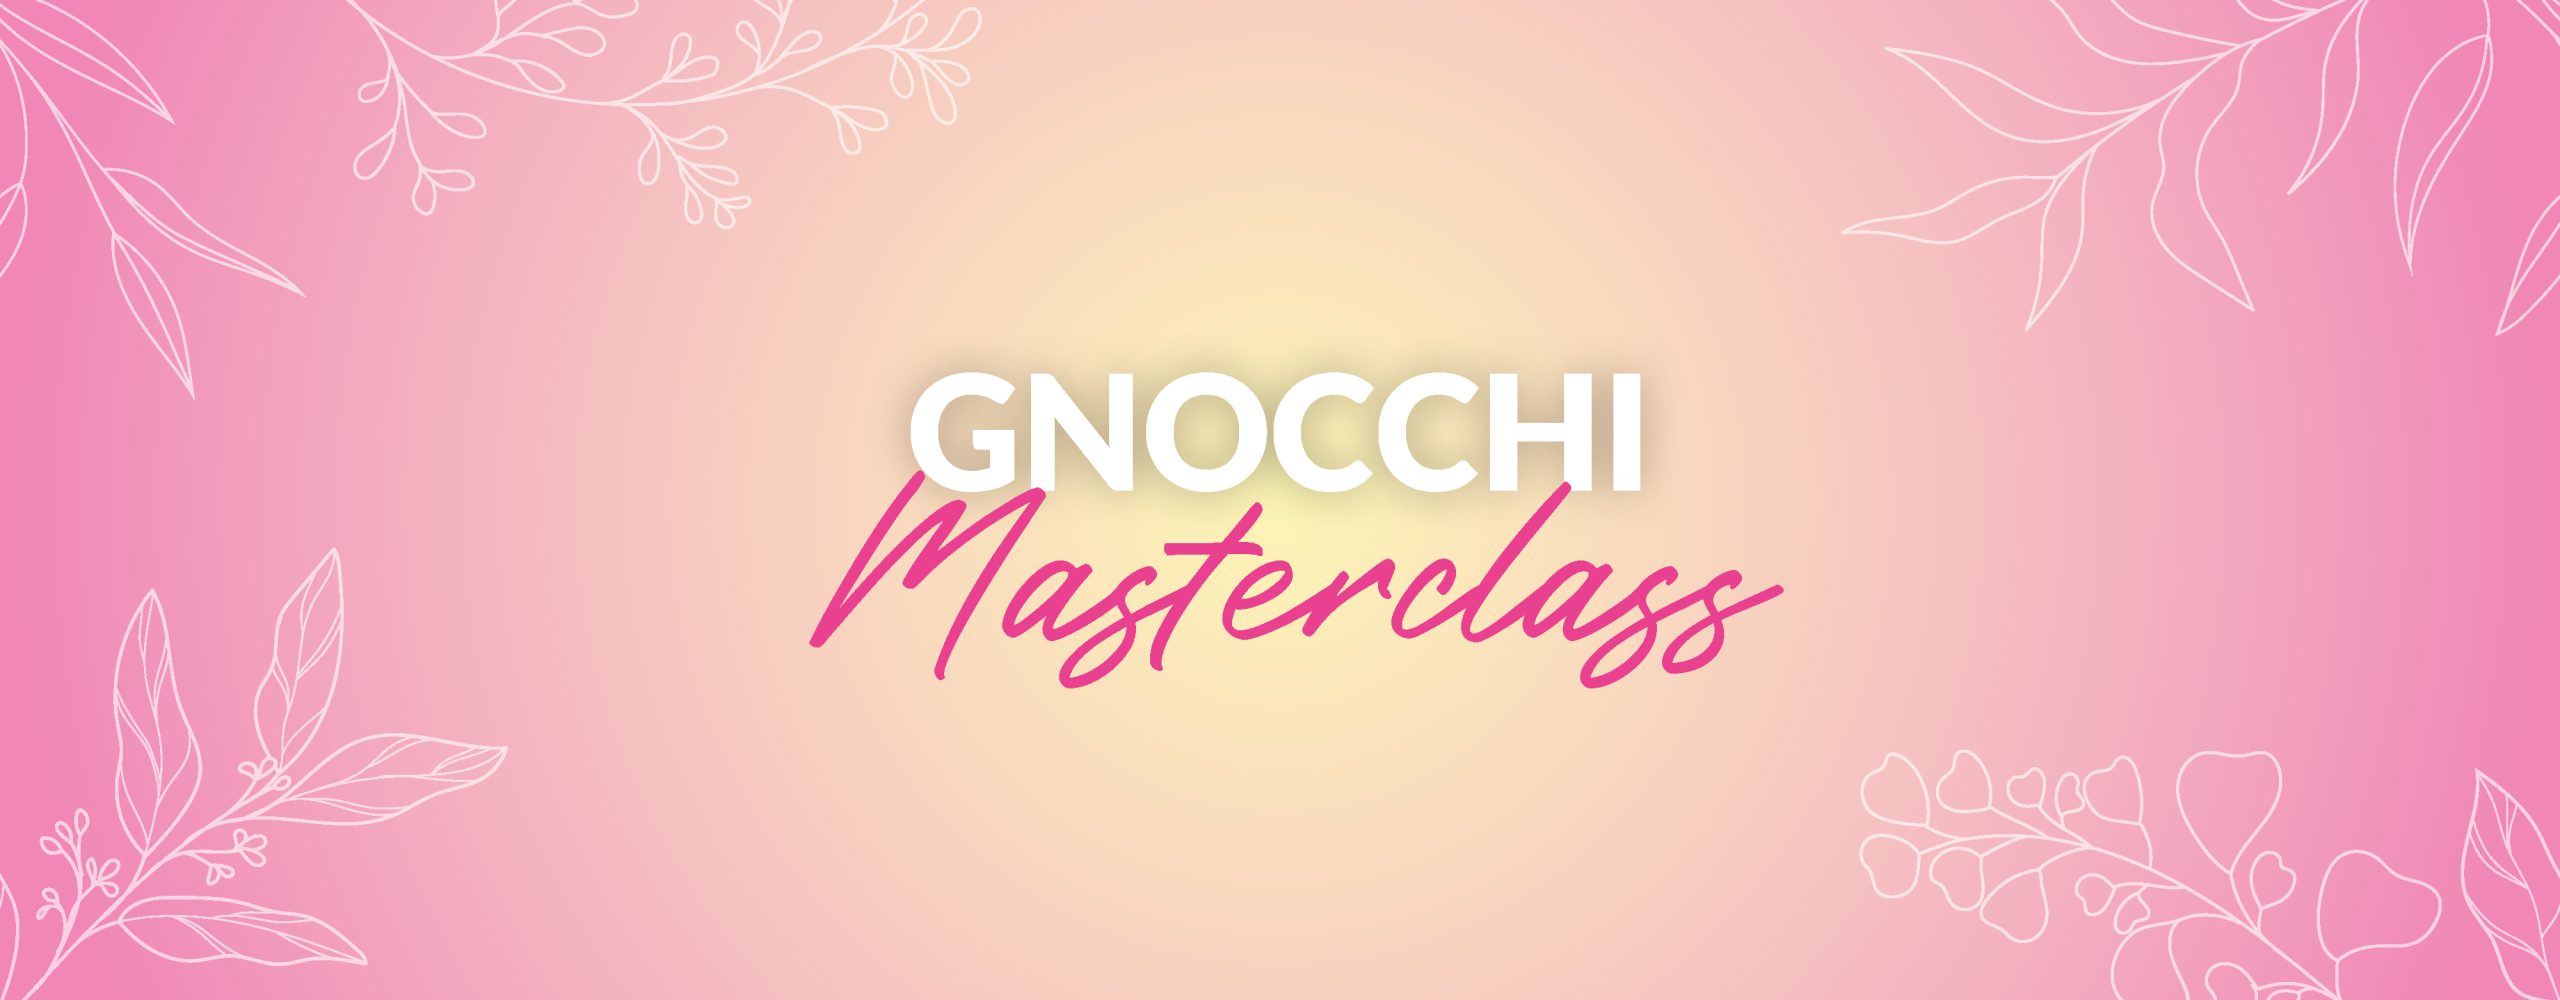 GNOCCHI Masterclass - 23.02.